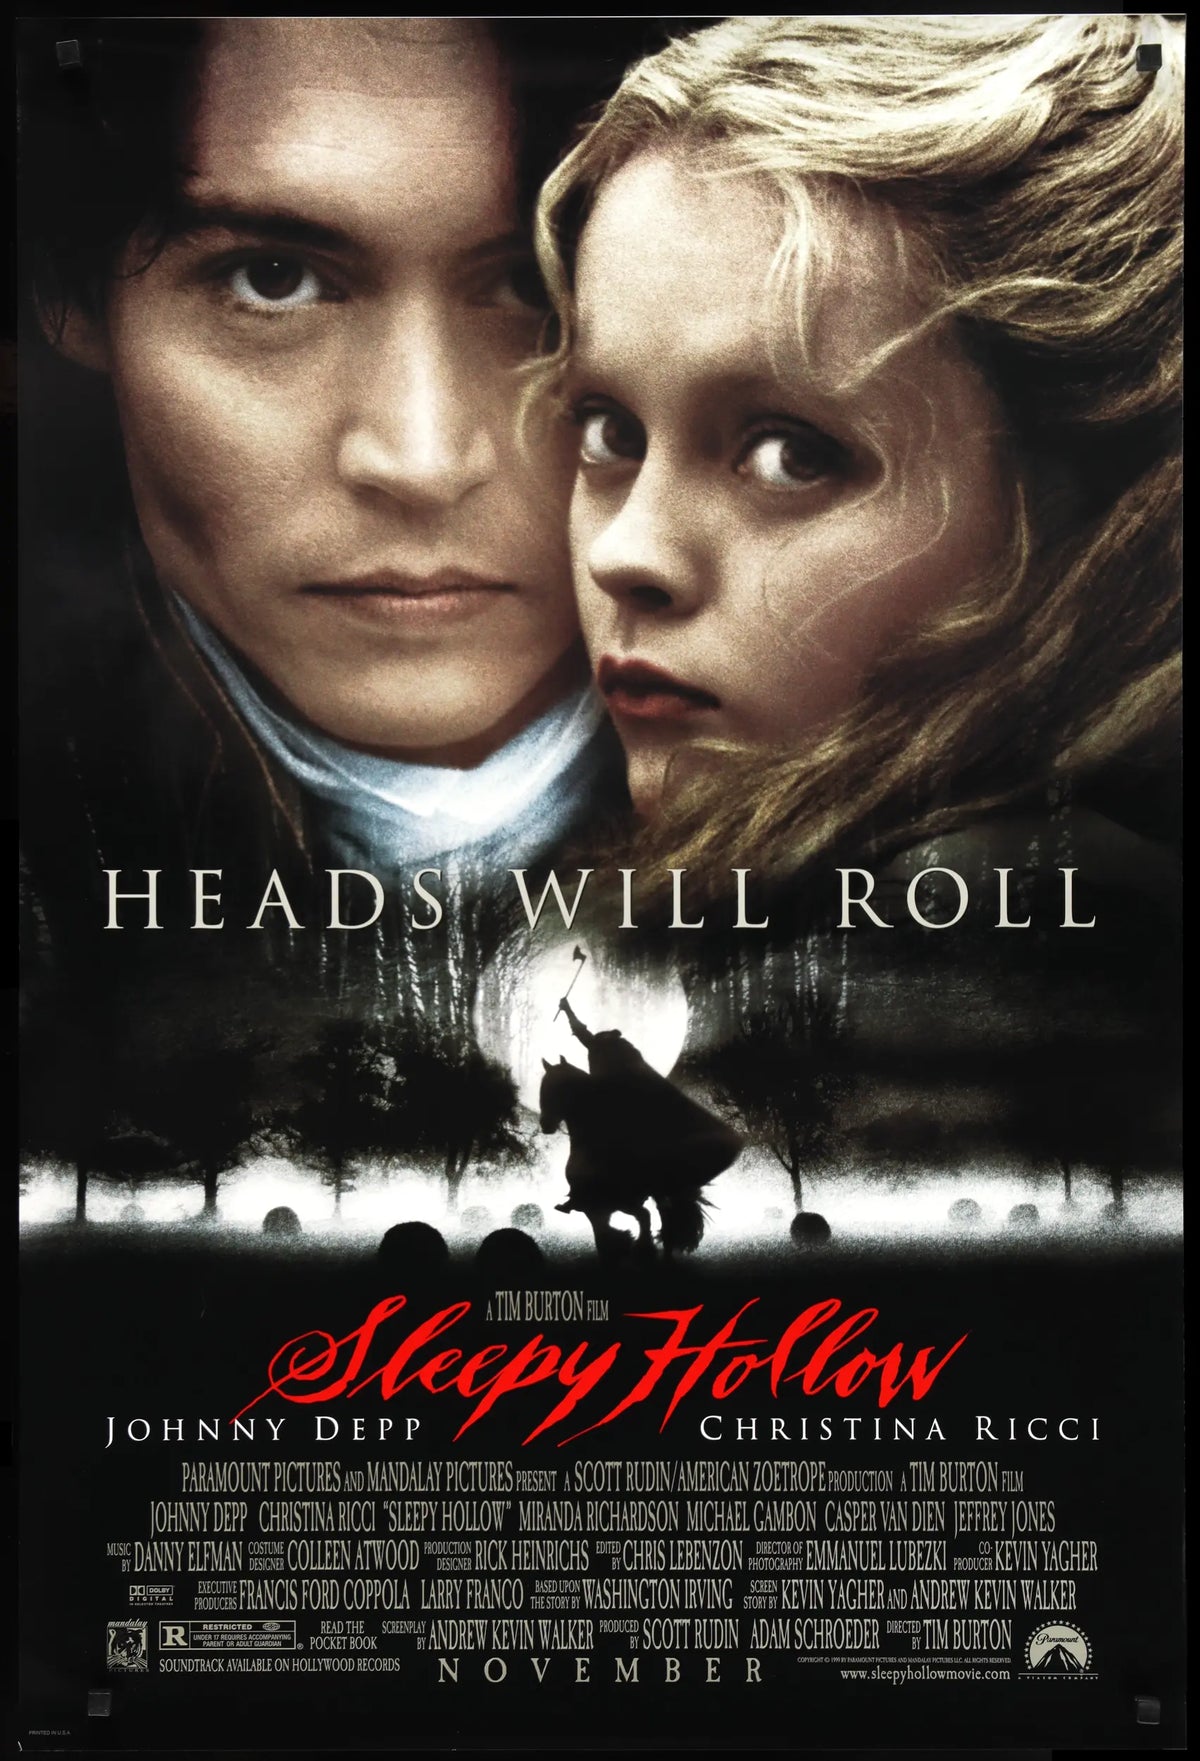 Sleepy Hollow (1999) original movie poster for sale at Original Film Art